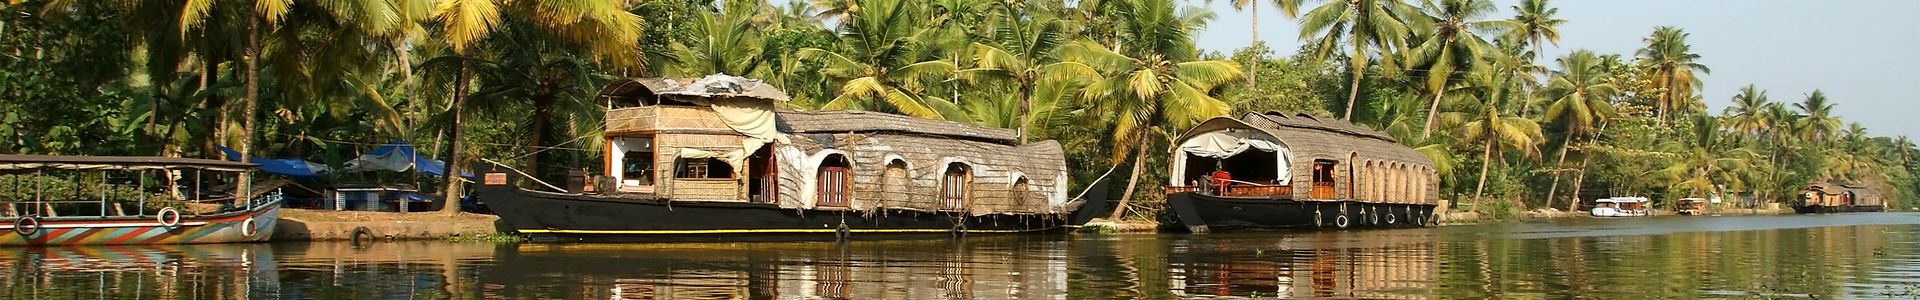 house-boat-in-the-kerala-india-backwaters-inde-thinkstockphotos-jpg.jpg